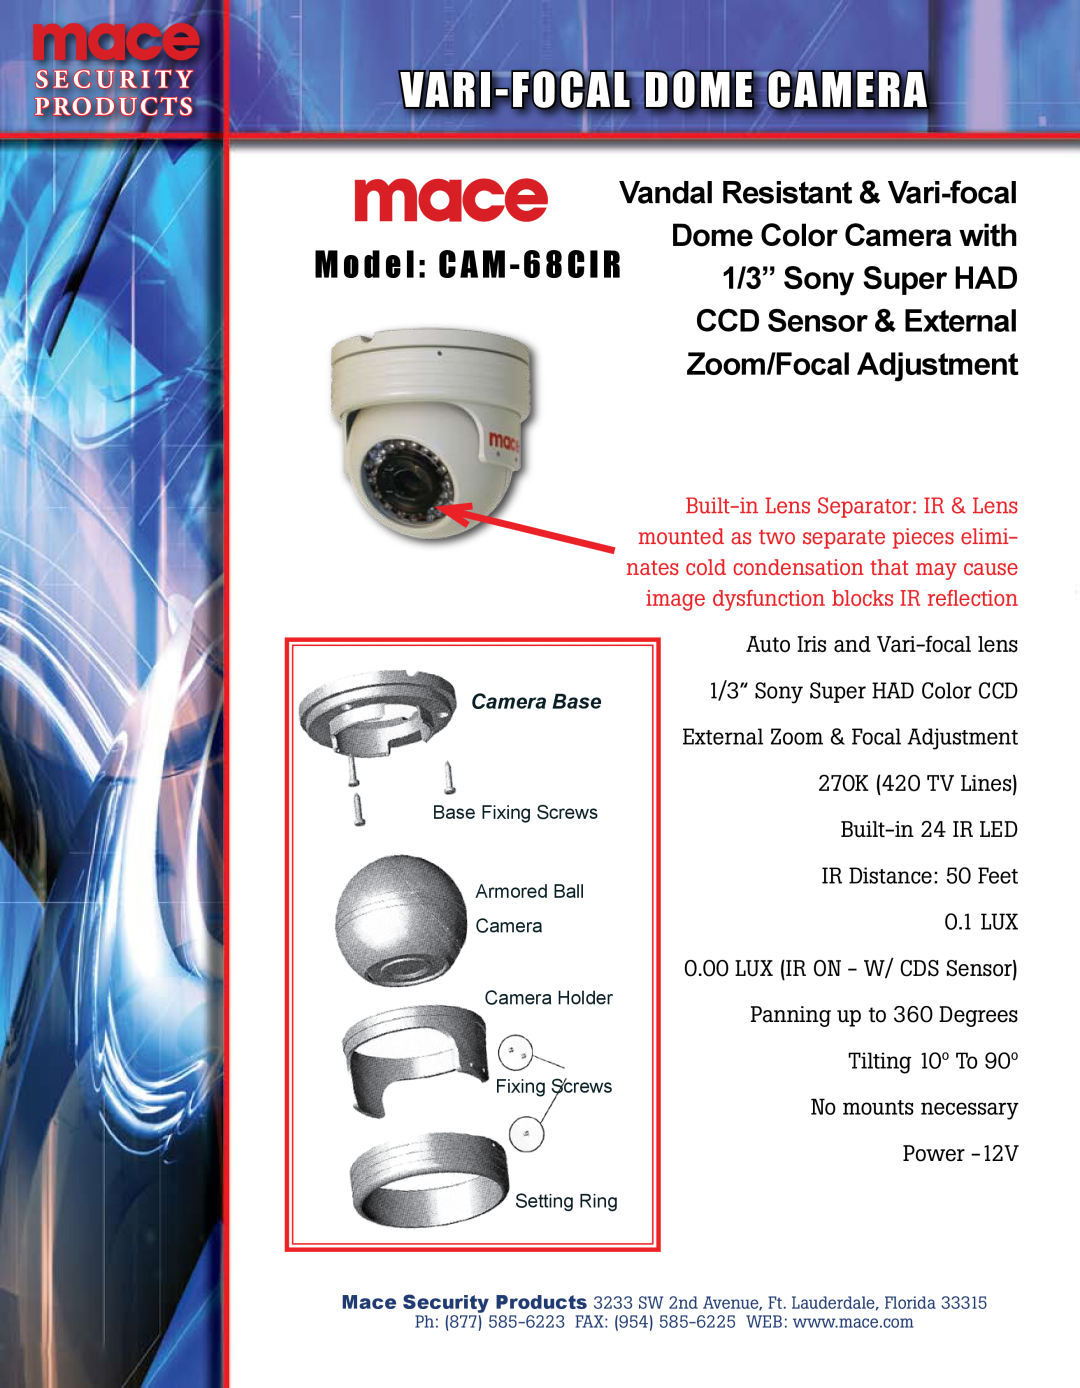 Mace CAM-68CIR manual Vari-Focal Dome Camera, Vandal Resistant & Vari-focal Dome Color Camera with 